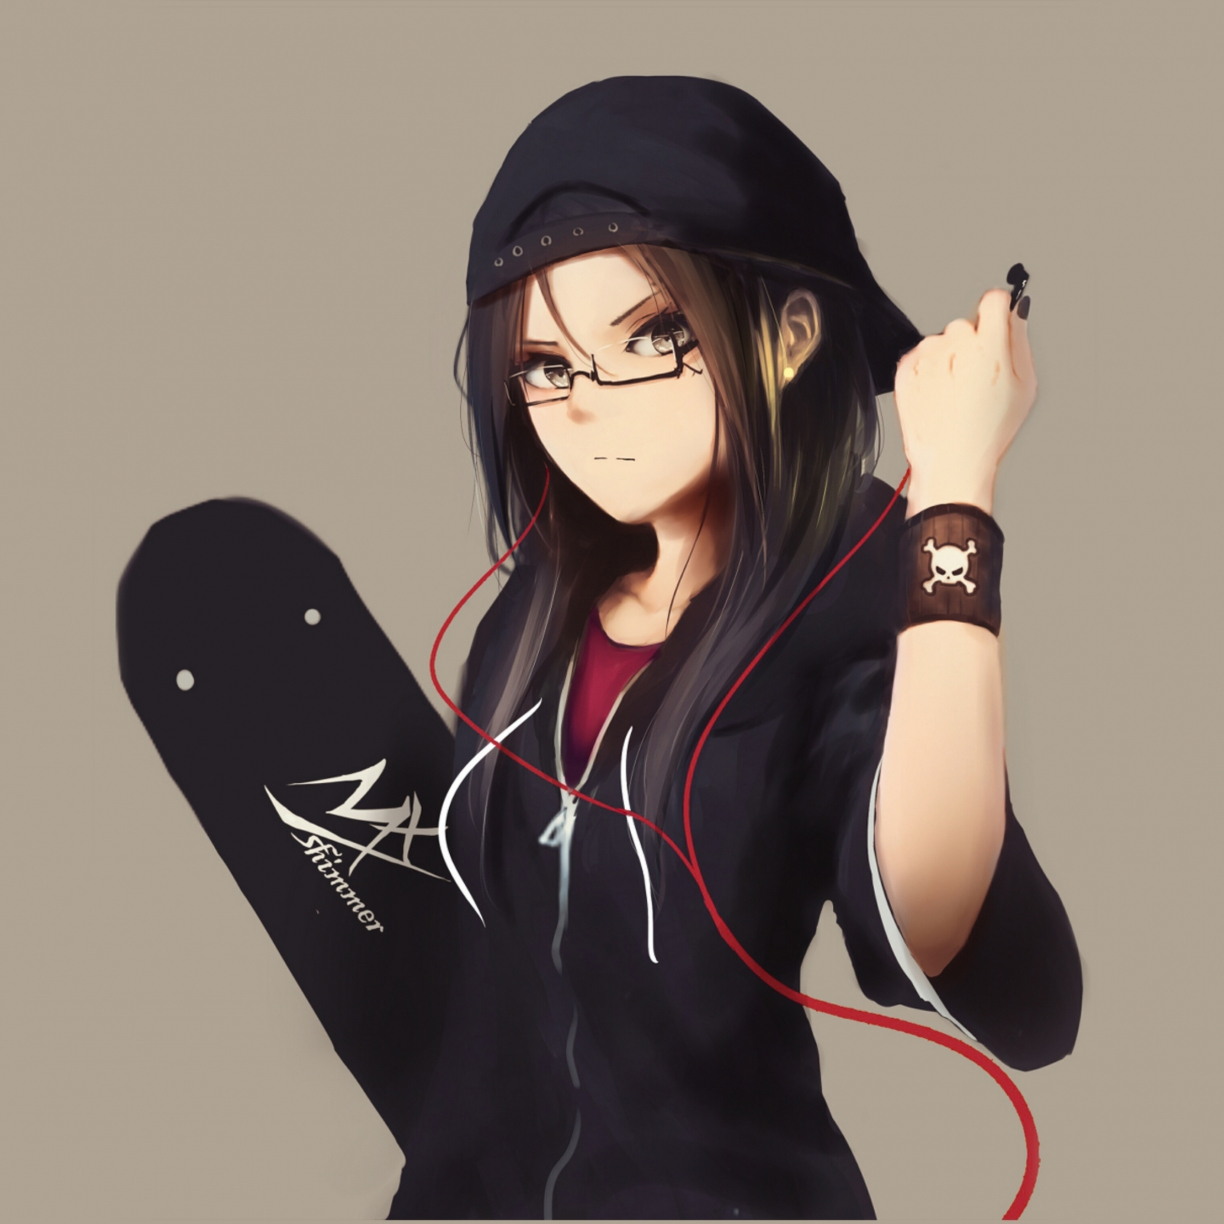 Wallpaper anime girl with skate board, urban, art desktop wallpaper, hd  image, picture, background, 38560d | wallpapersmug